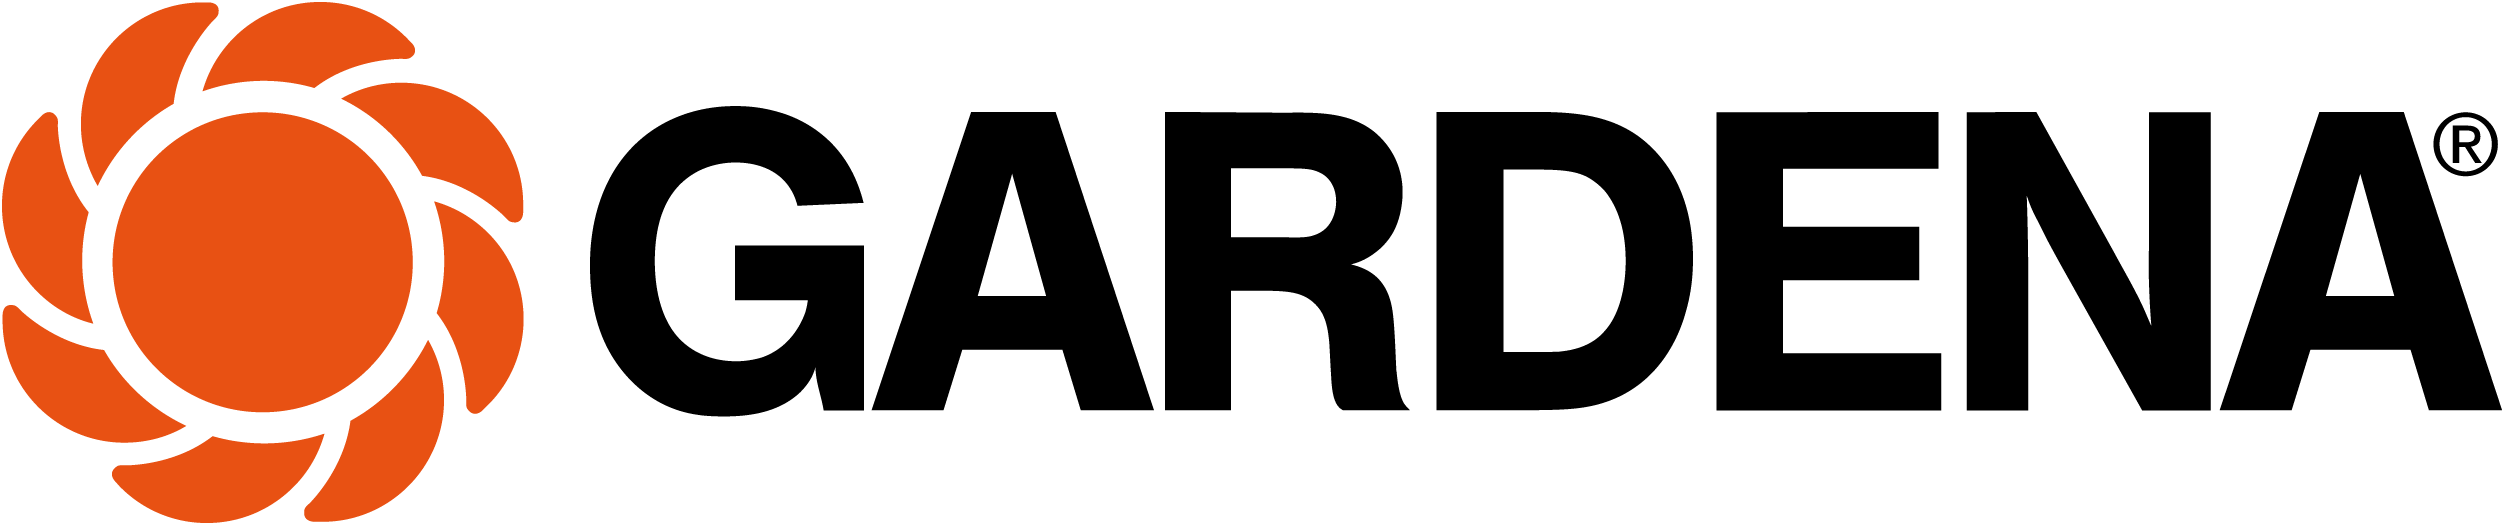 Gardena Worldwide logo